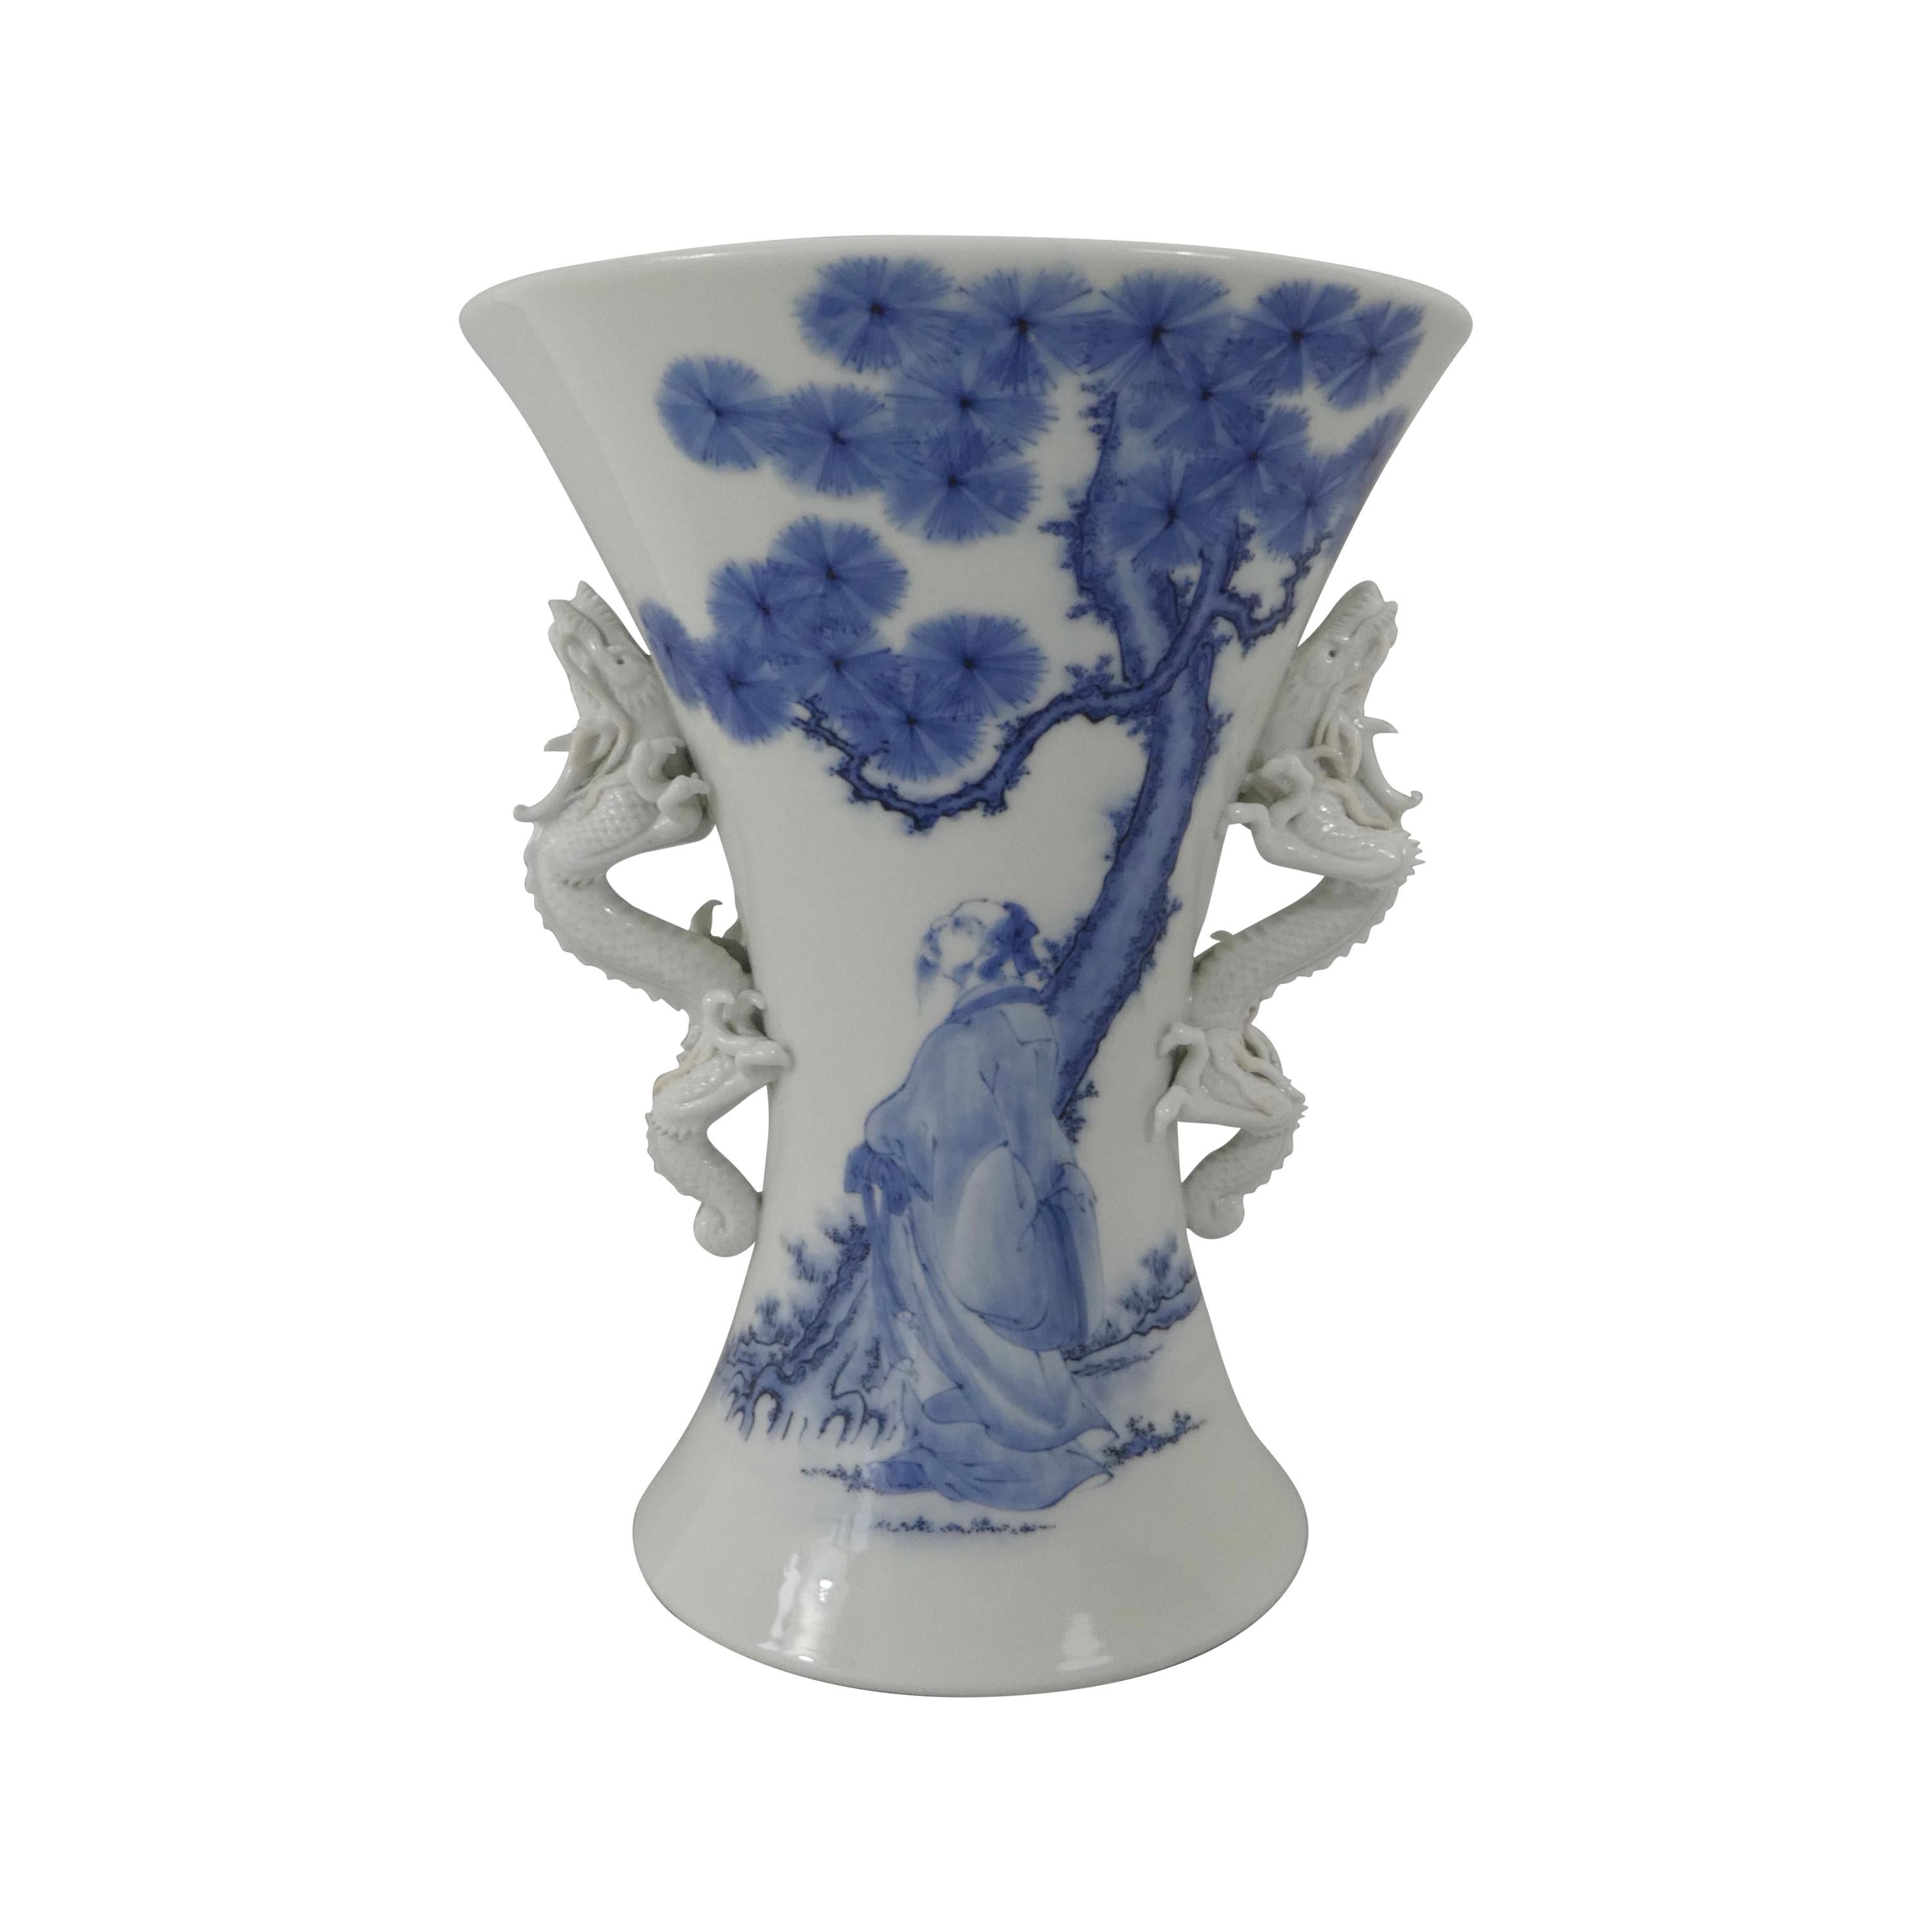 Hirado Porcelain Vase, Japanese, Meiji Period, 1868 -1912